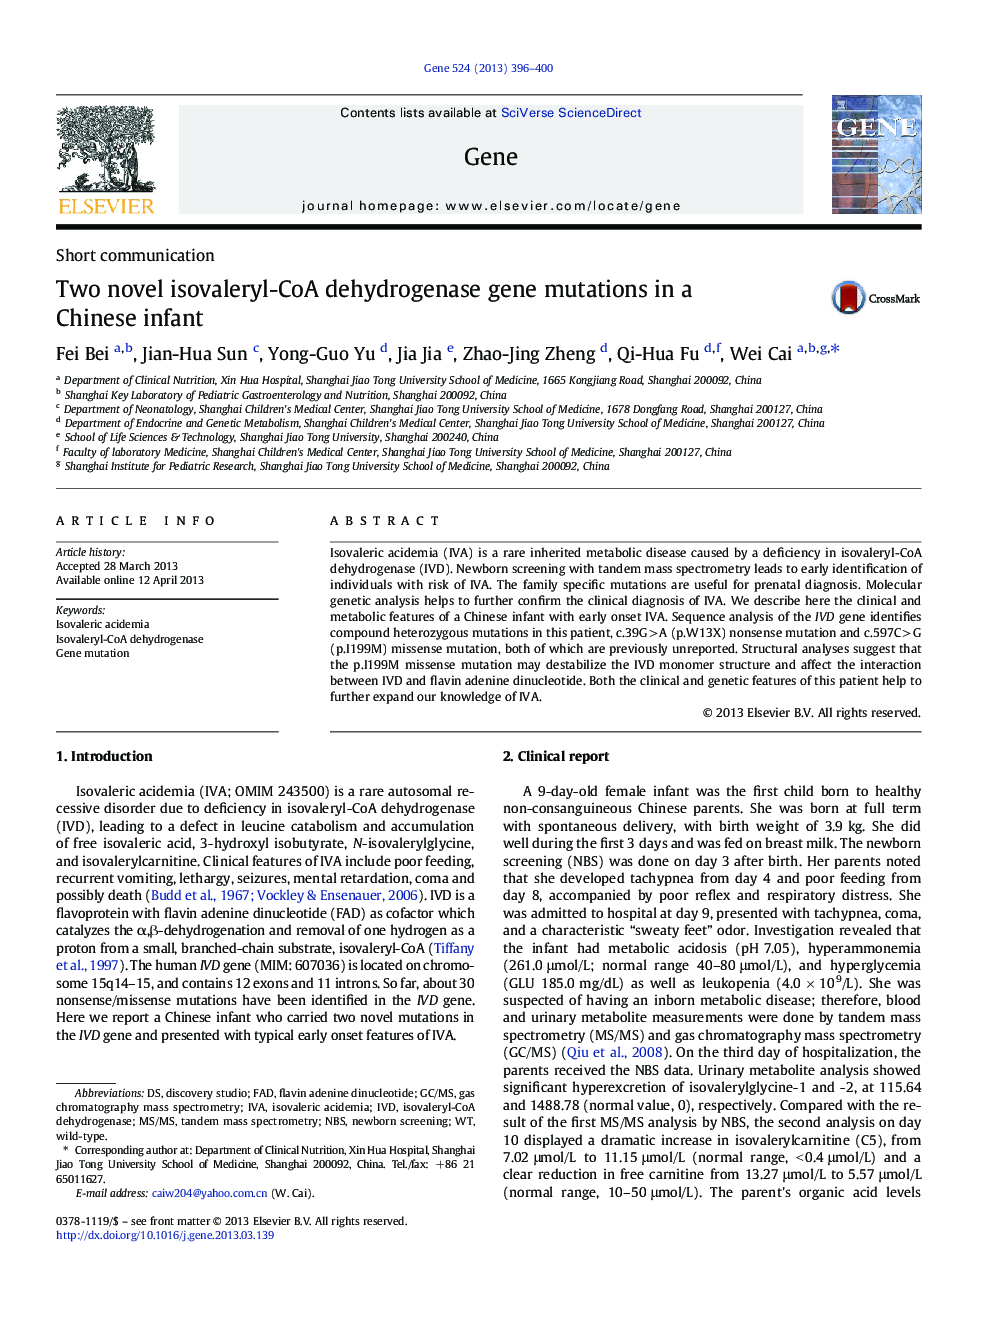 Two novel isovaleryl-CoA dehydrogenase gene mutations in a Chinese infant